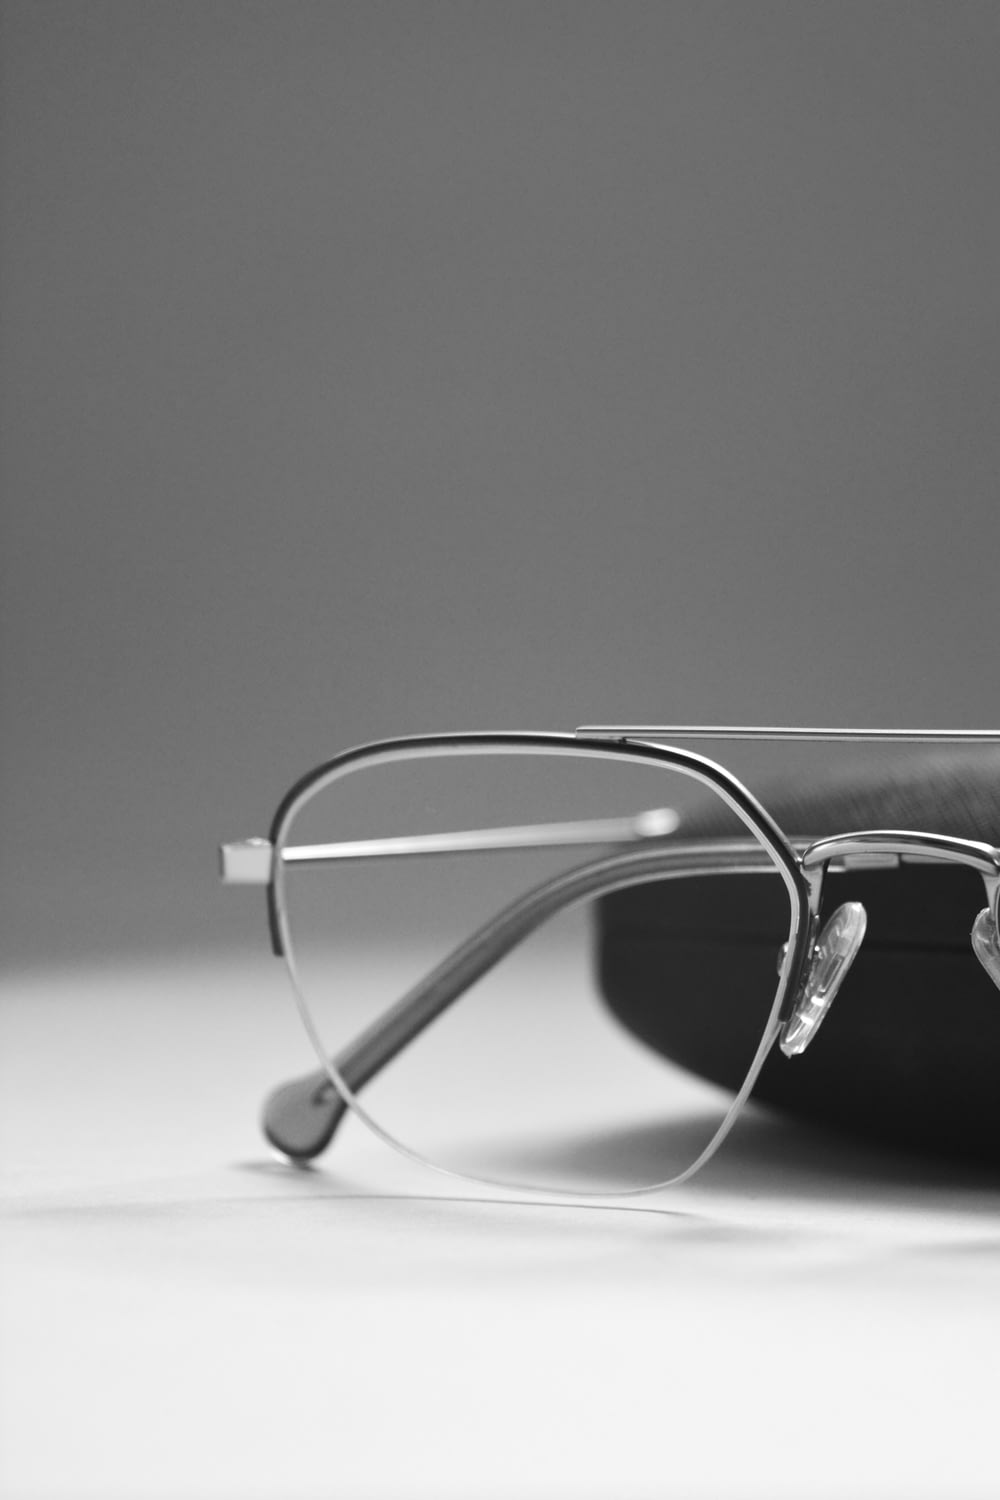 eyeglasses on white surface